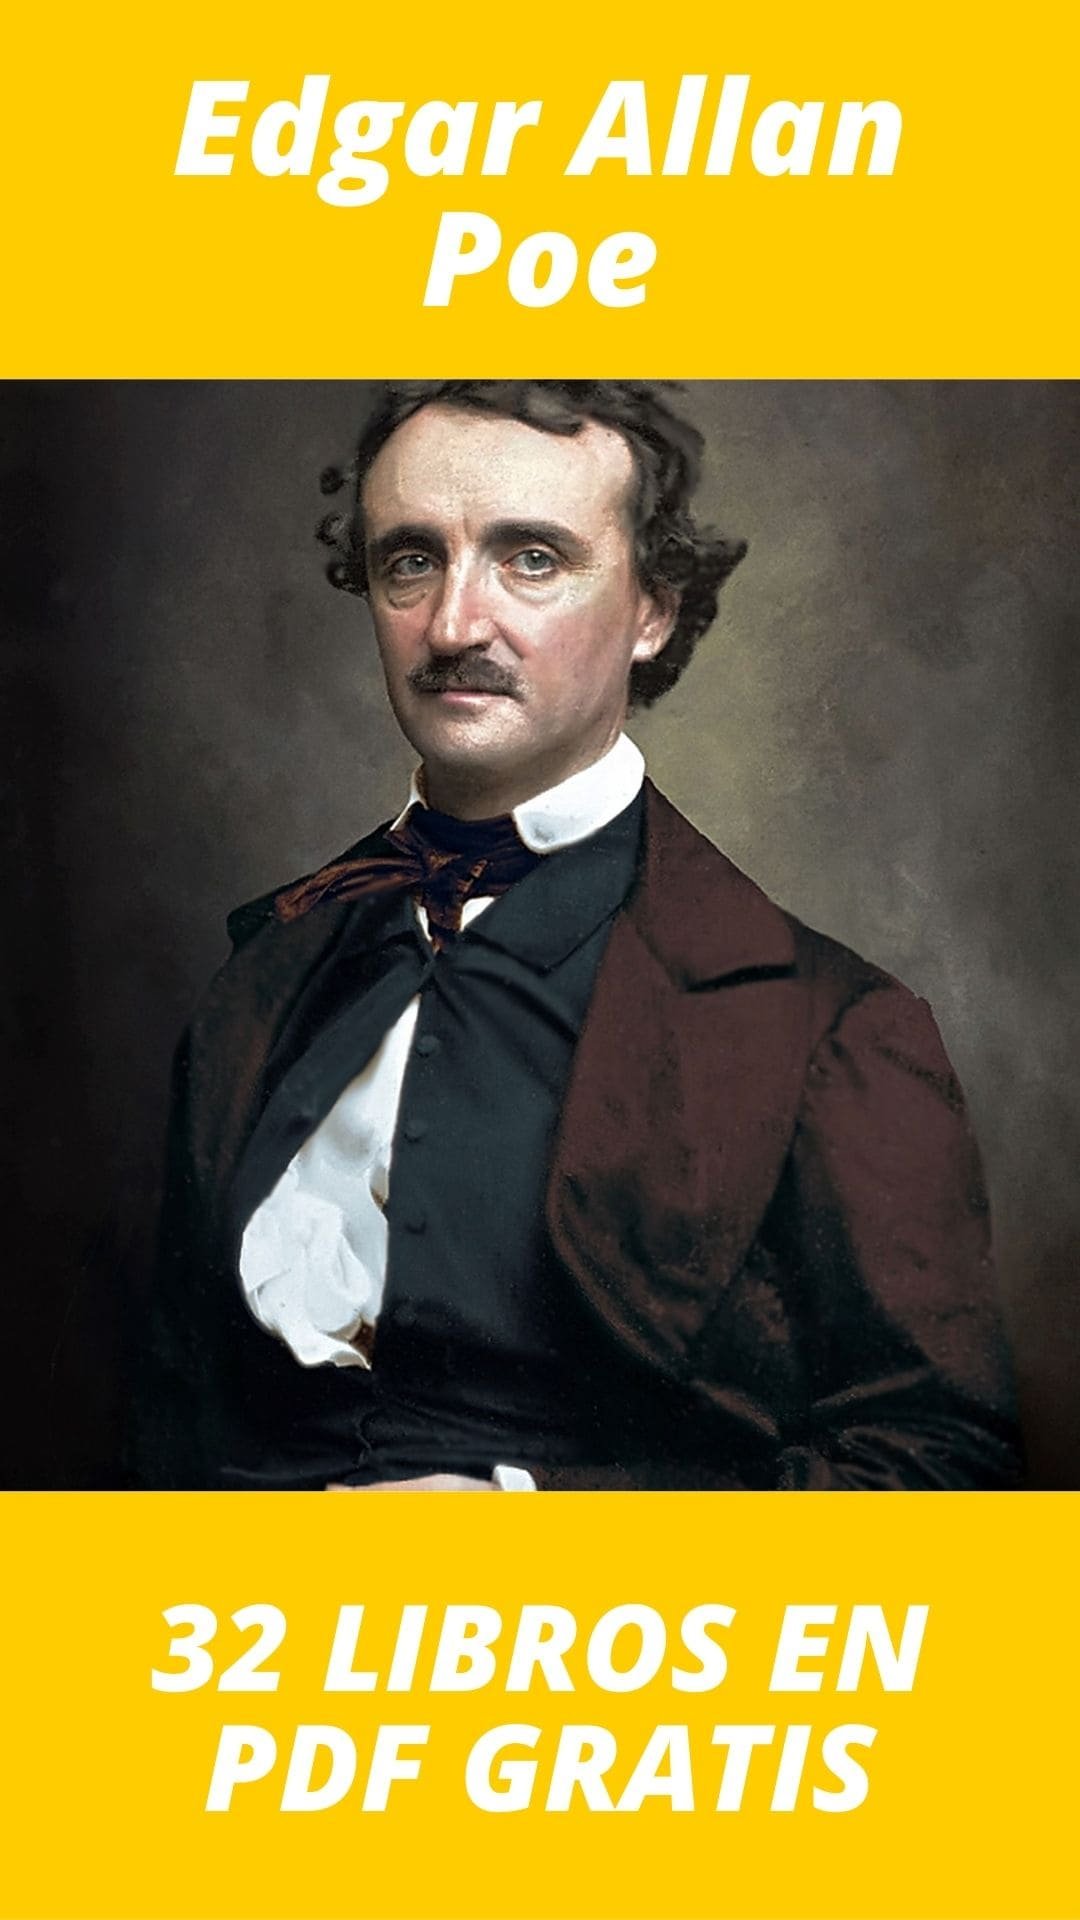 Libros de Edgar Allan Poe Gratis en PDF